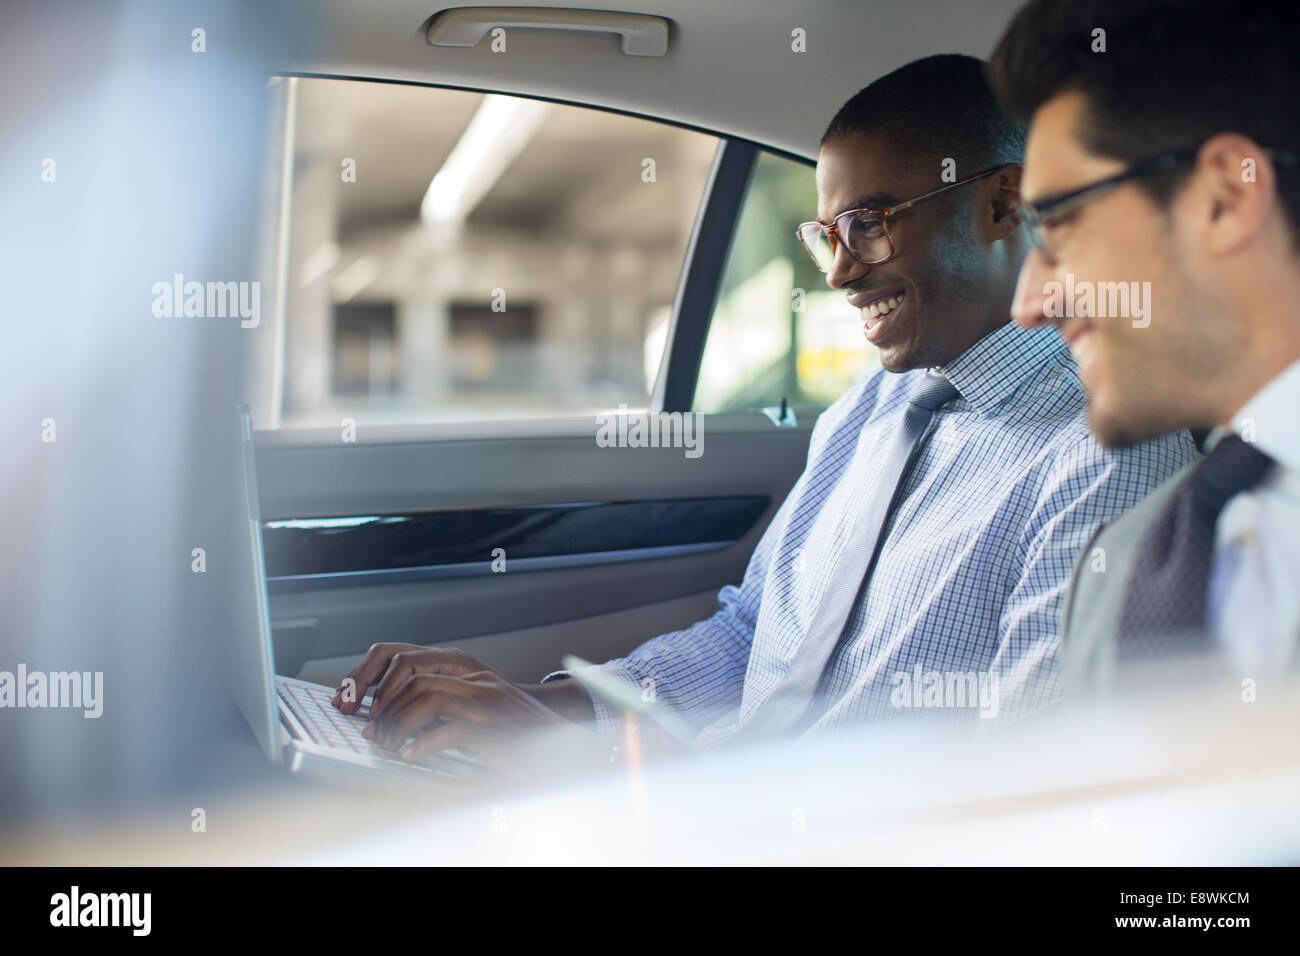 Businessmen using laptop in car Stock Photo